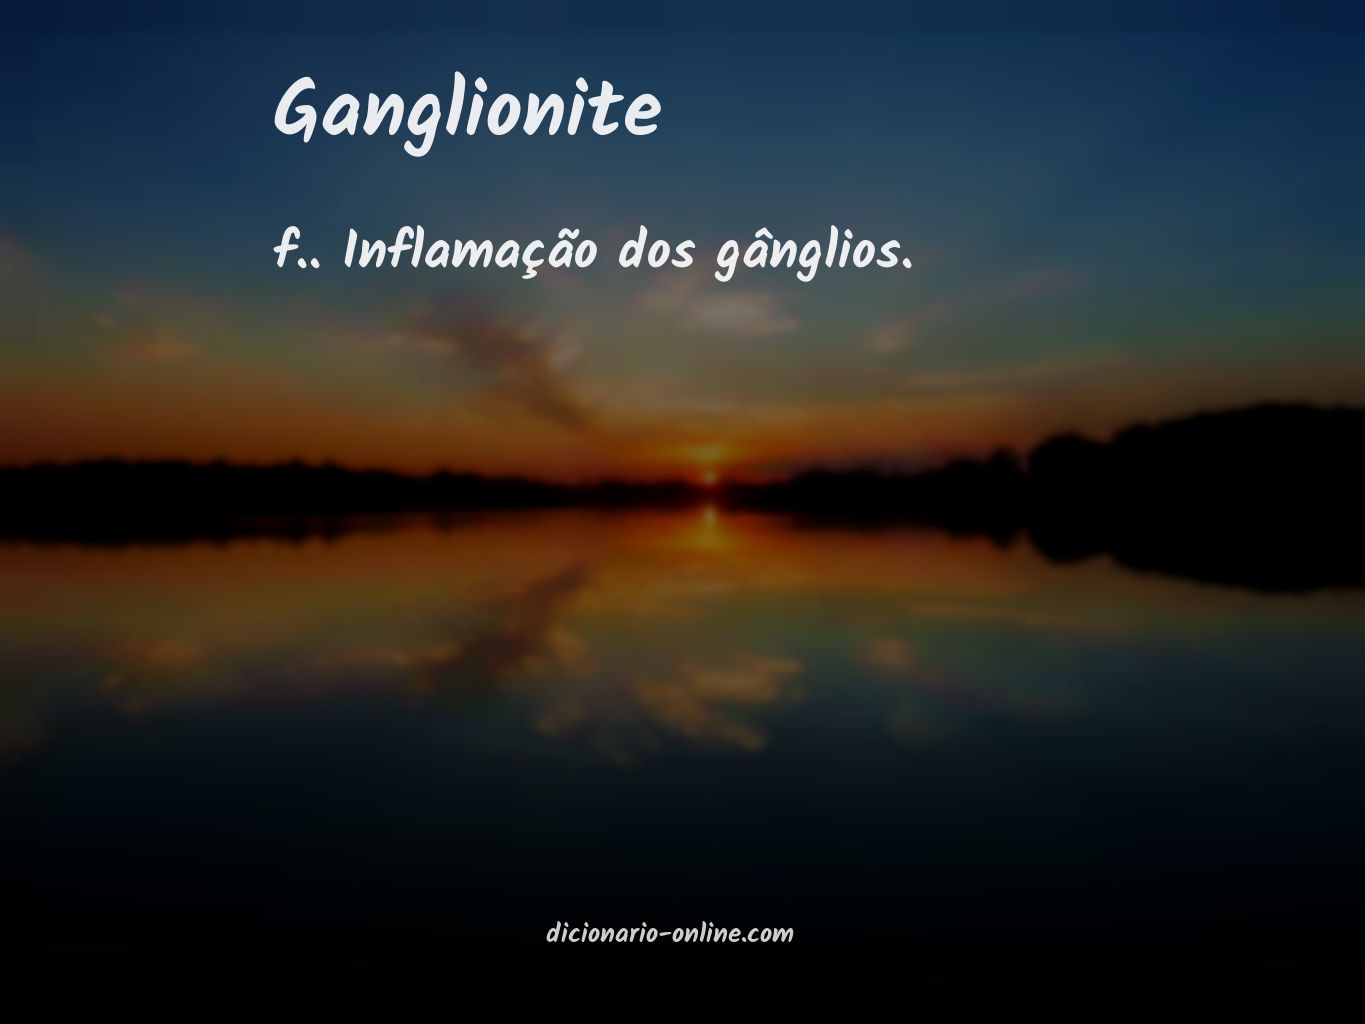 Significado de ganglionite